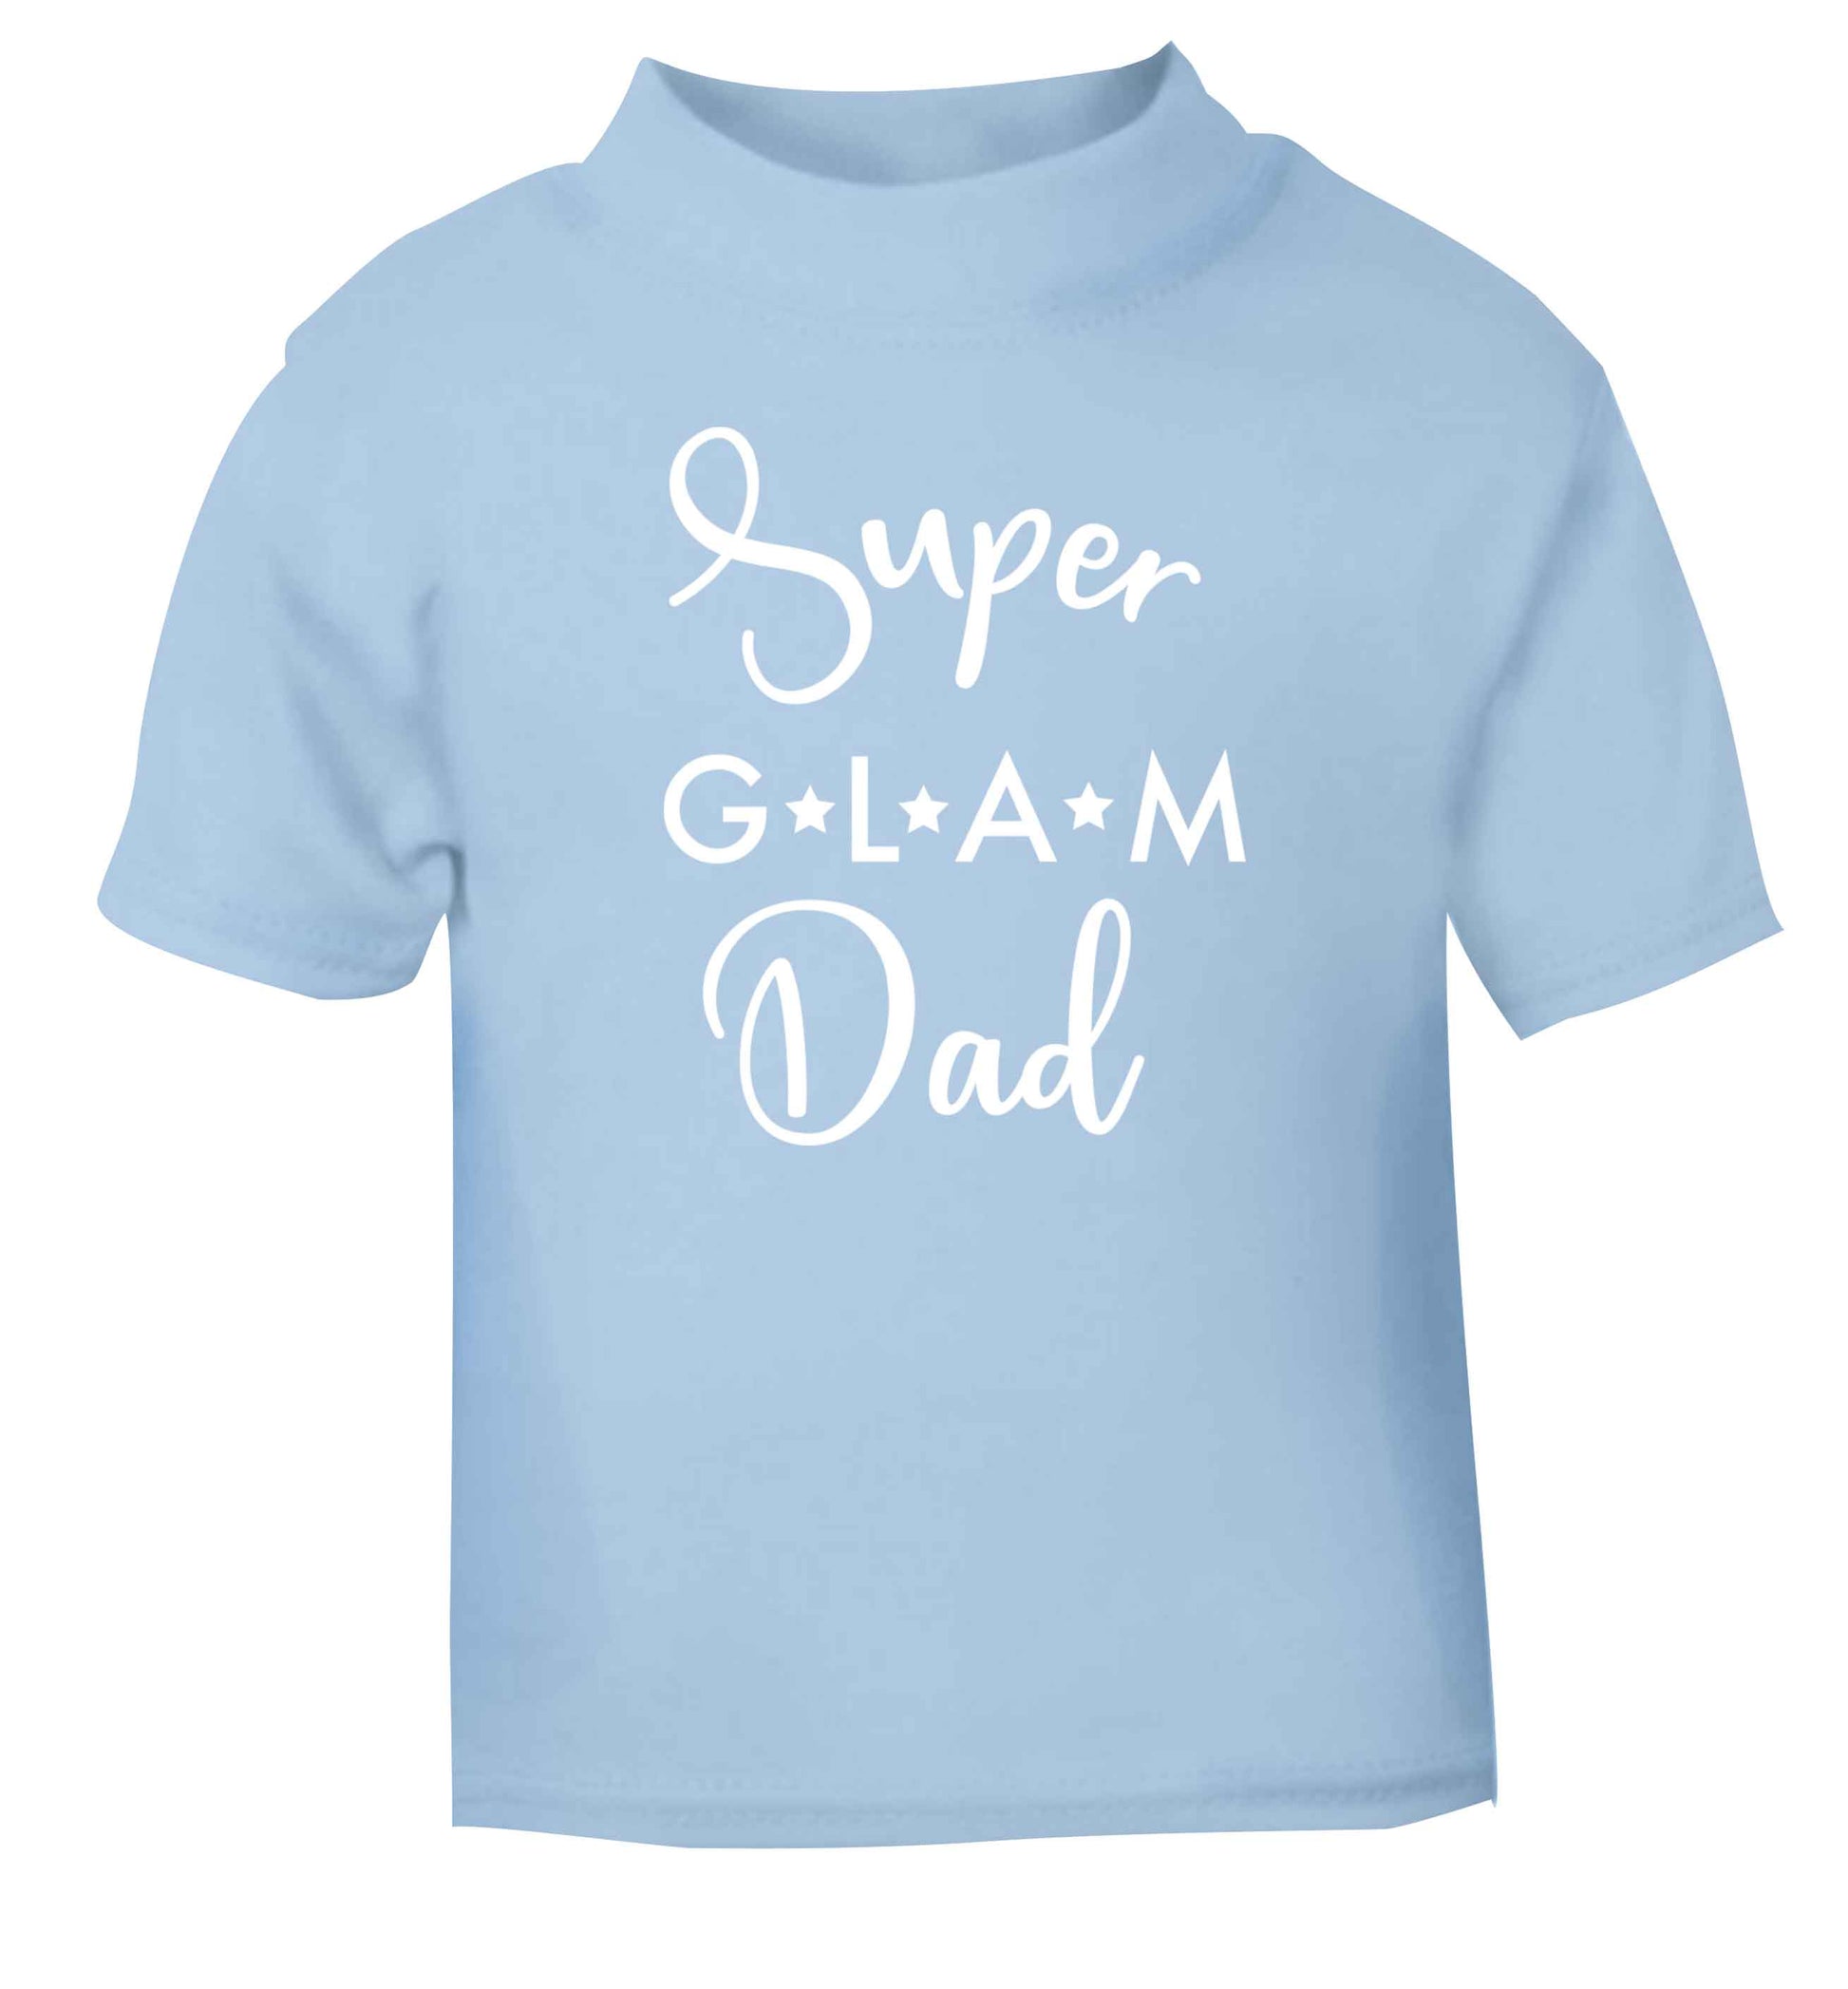 Super glam Dad light blue Baby Toddler Tshirt 2 Years